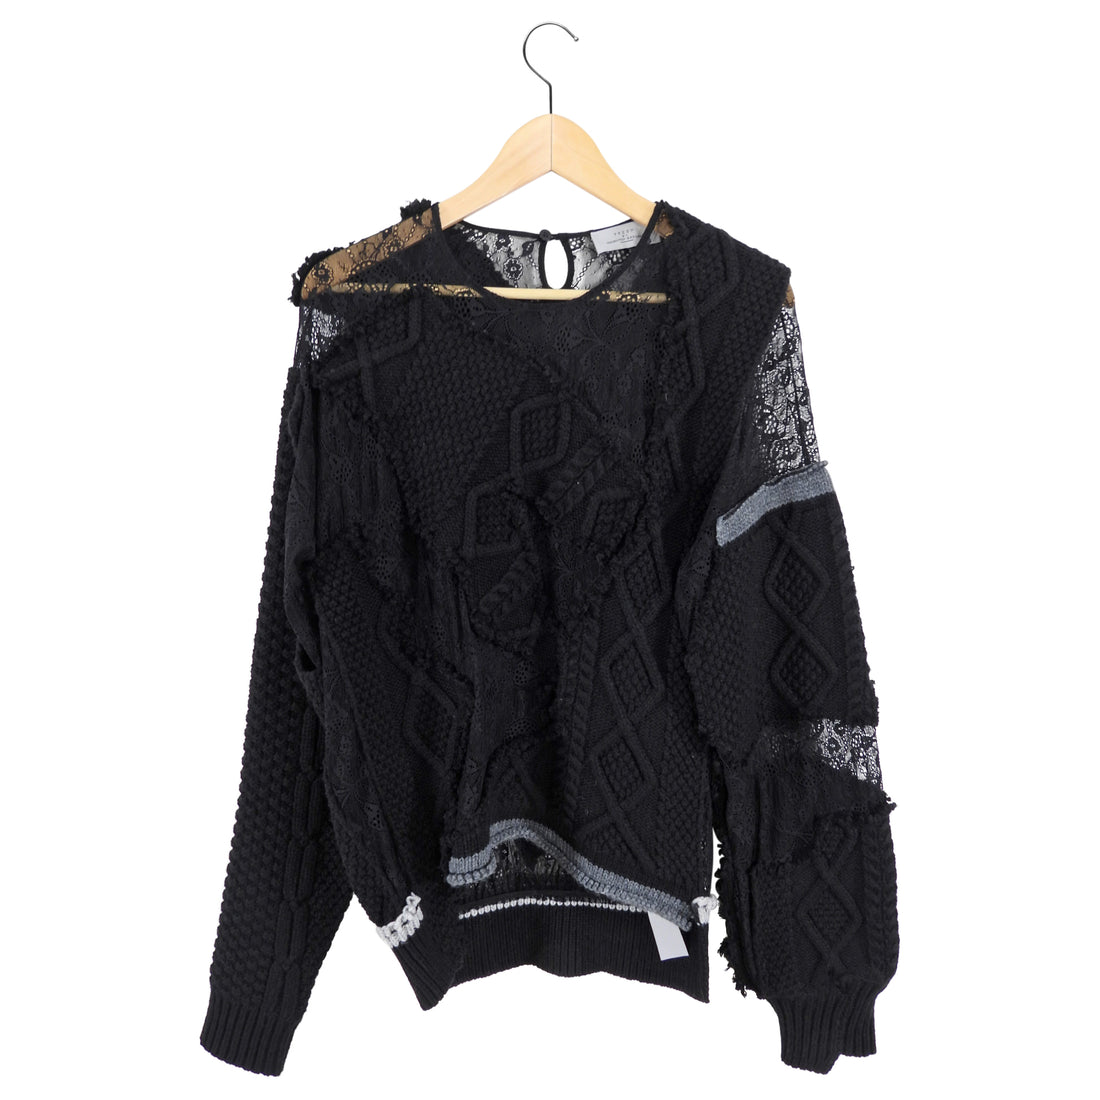 Preen by Thornton Bregazzi Black Patchwork Knit Lace Combo Sweater - XS / 4